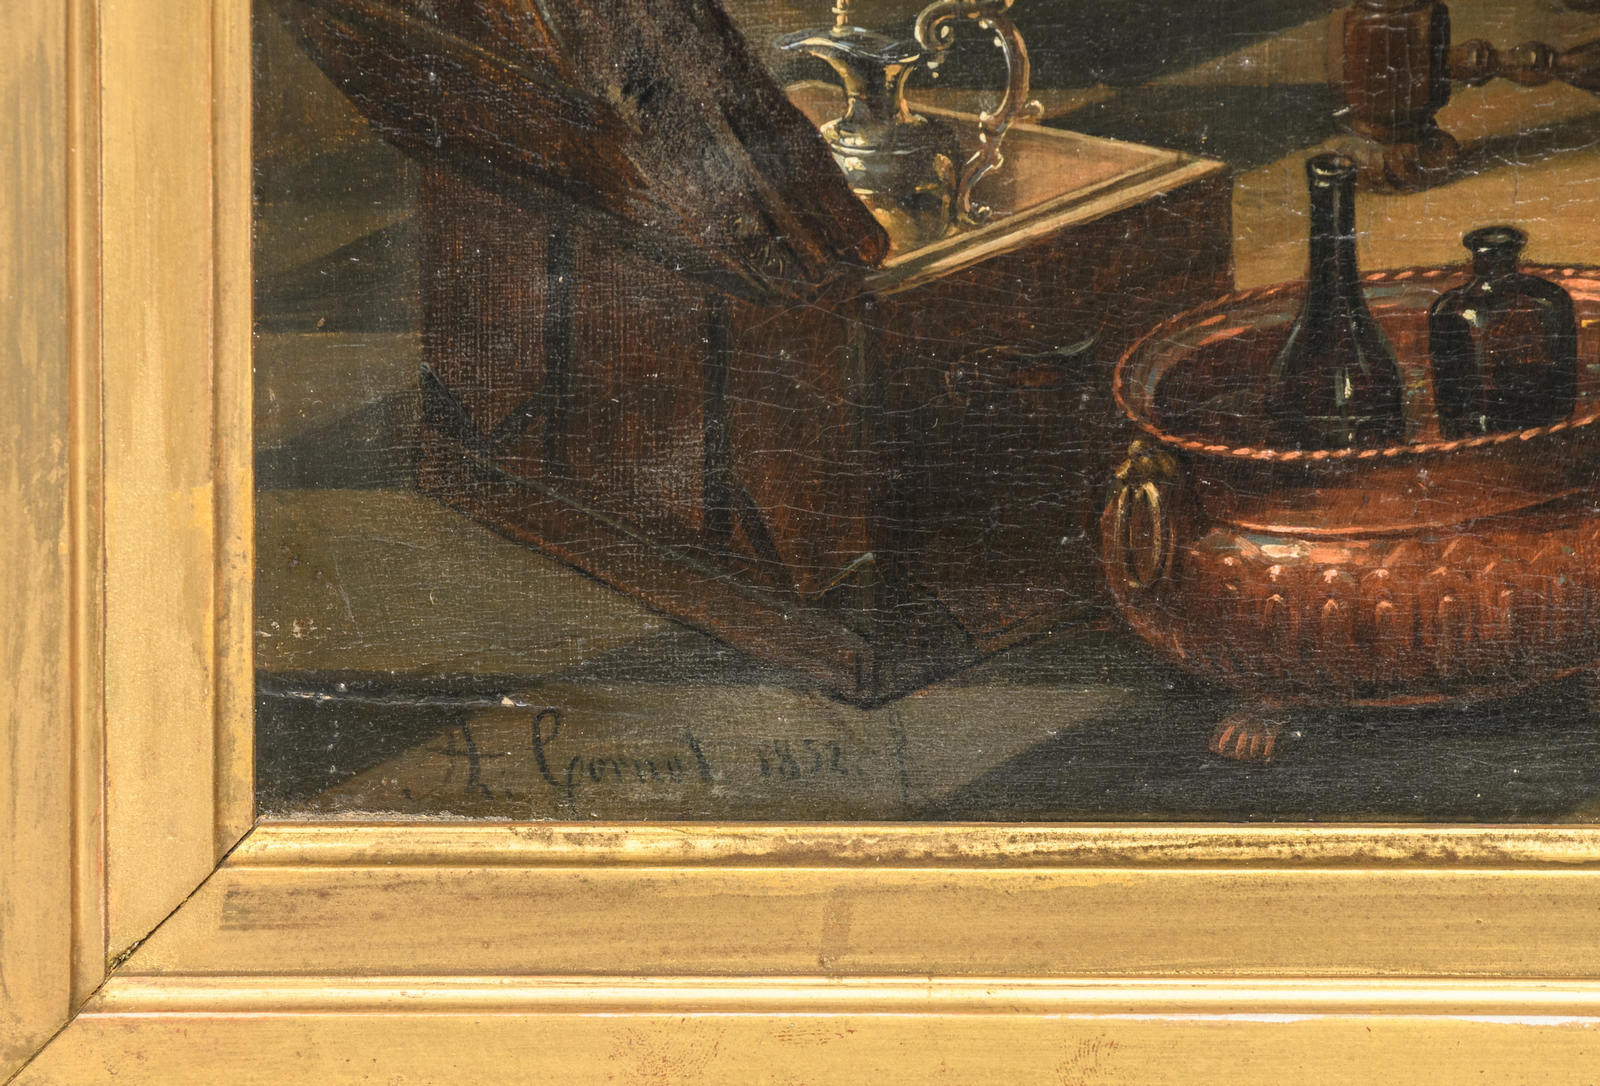 Cornet A., 'Chez l'usurier', oil on panel, dated 1852, 55,5 x 63,5 cm - Image 4 of 5